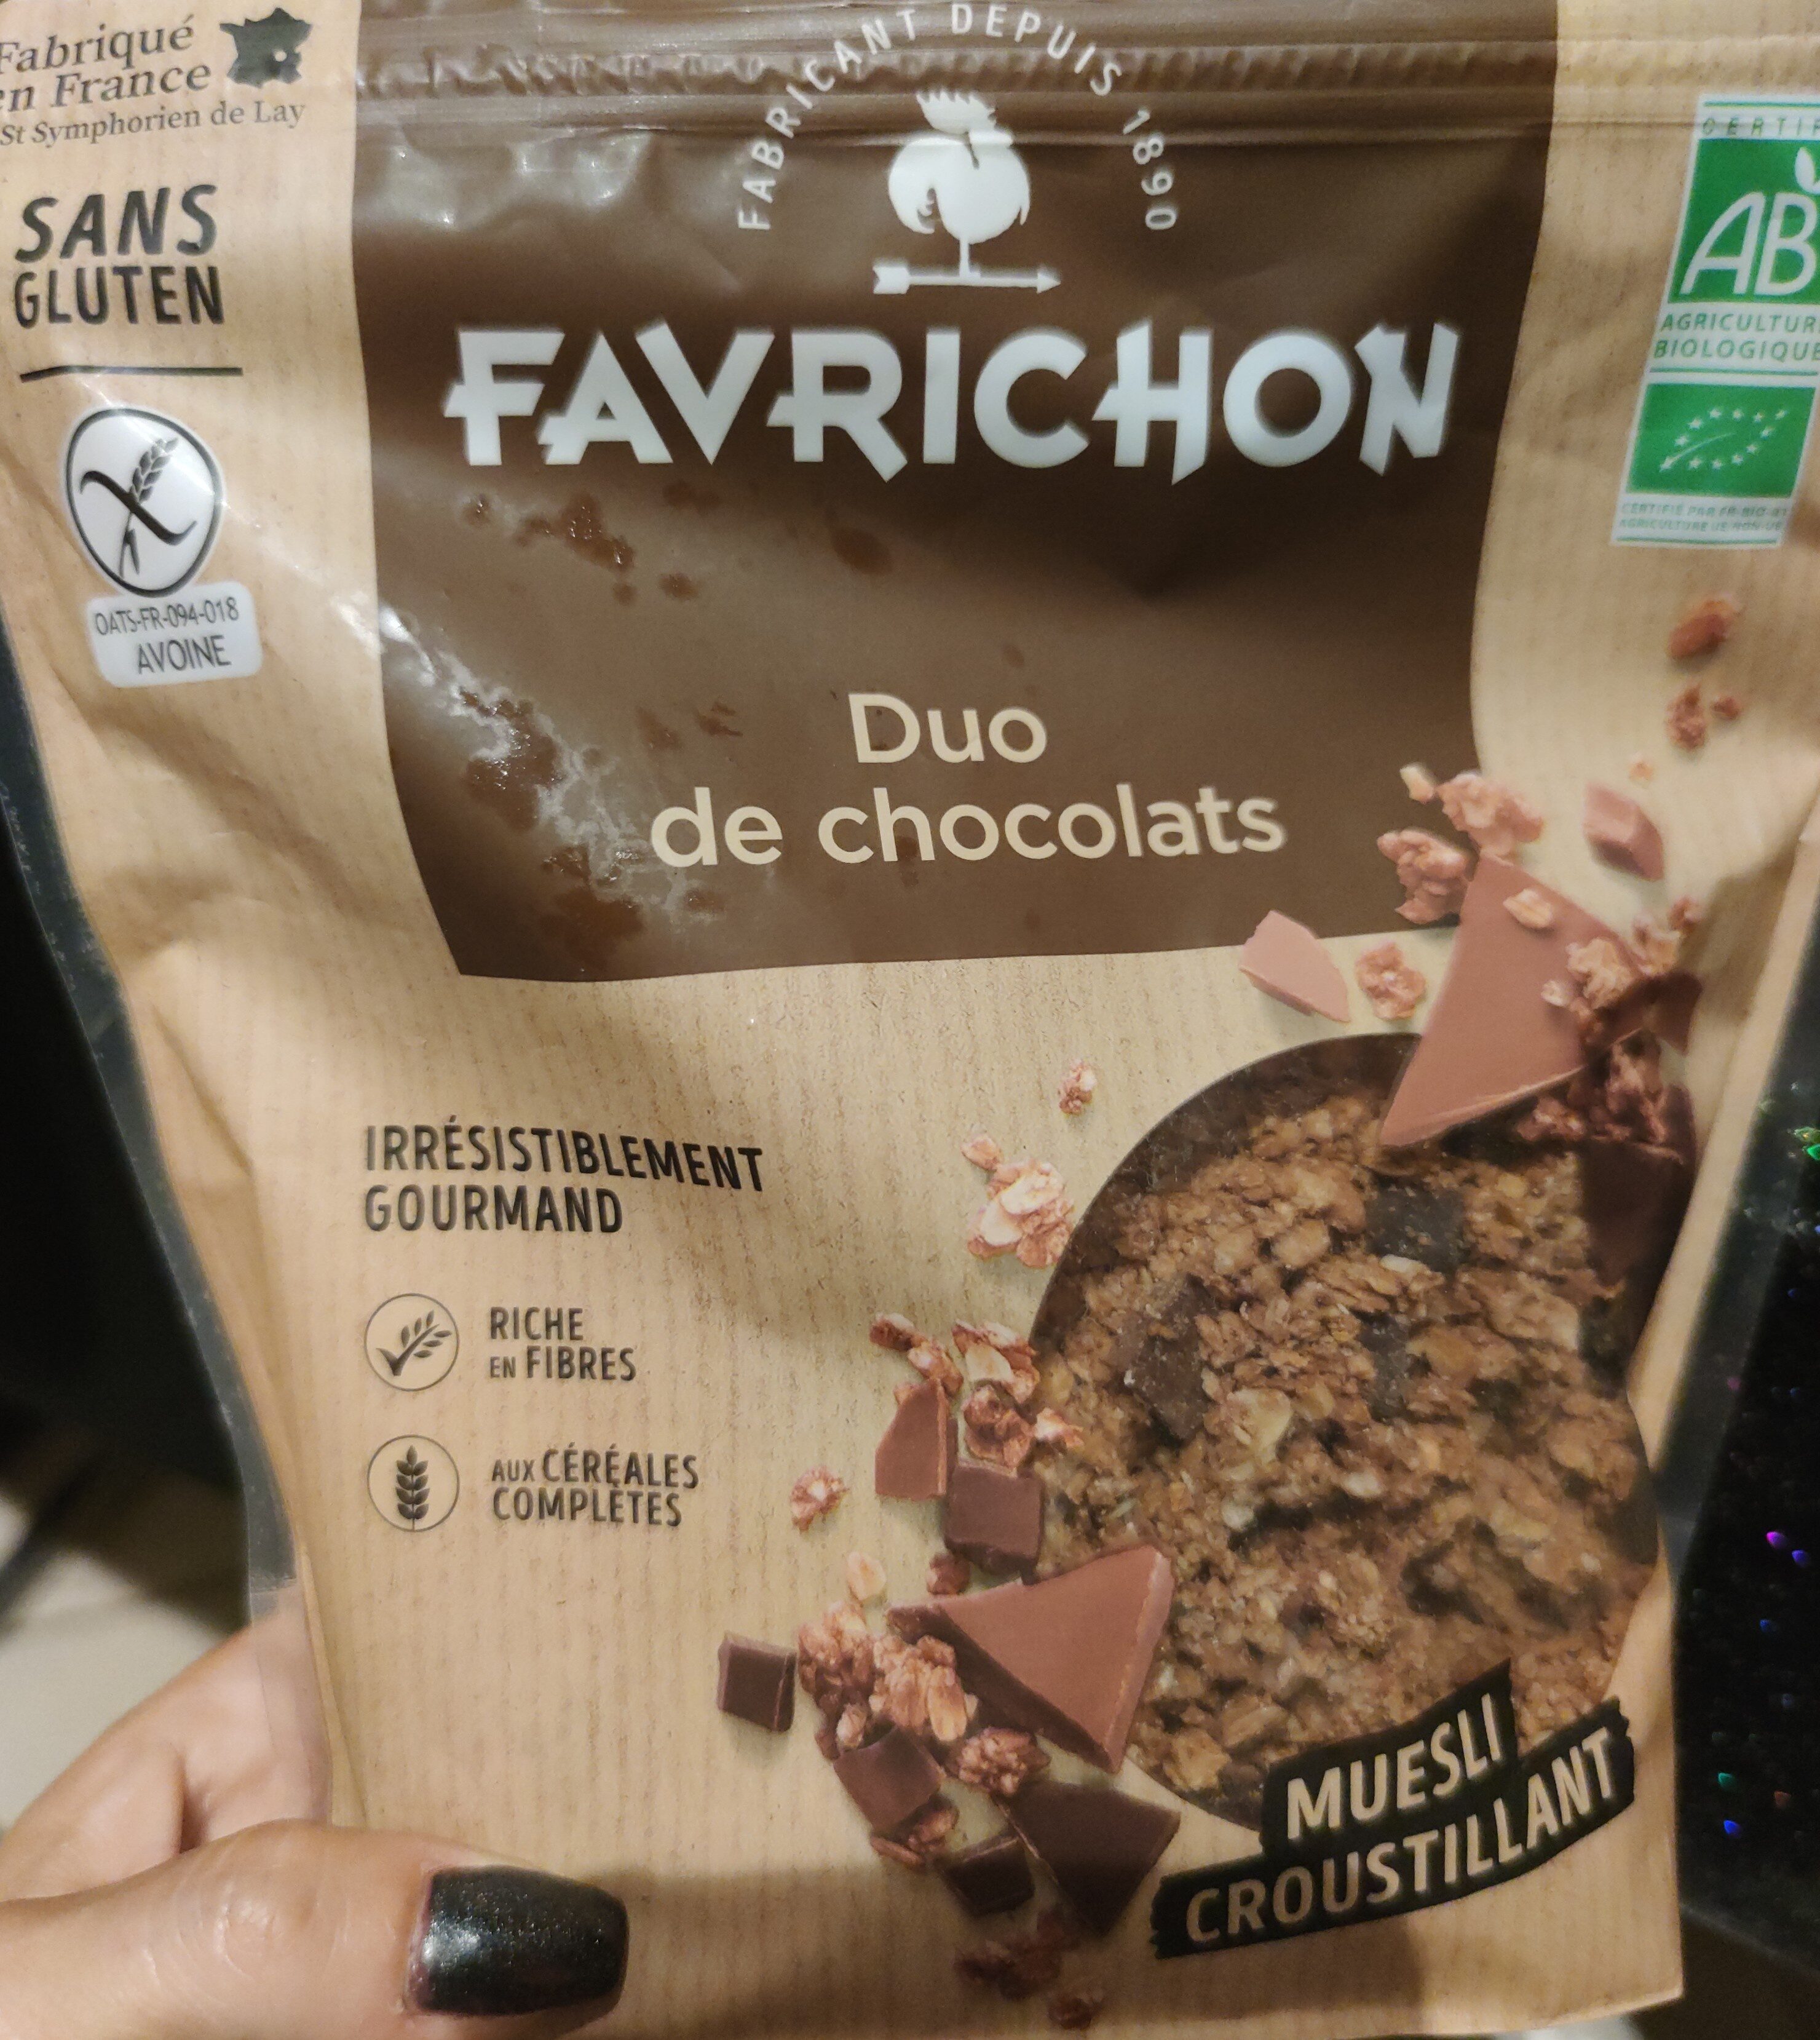 Muesli croustillant - duo de chocolats - Ingredients - fr